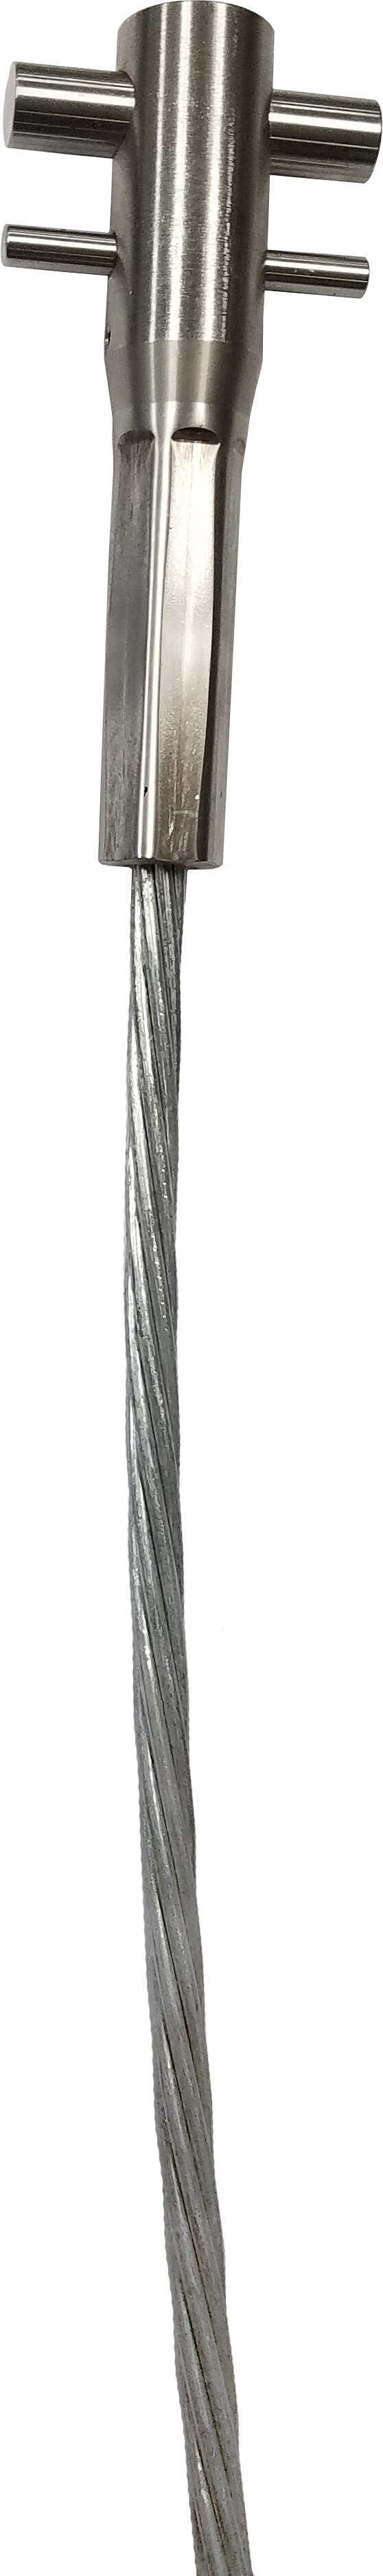 3M™ DBI-SALA® Lad-Saf™ Swaged Cable 6115019, 3/8 Inch, Galvanized Steel, 35 m